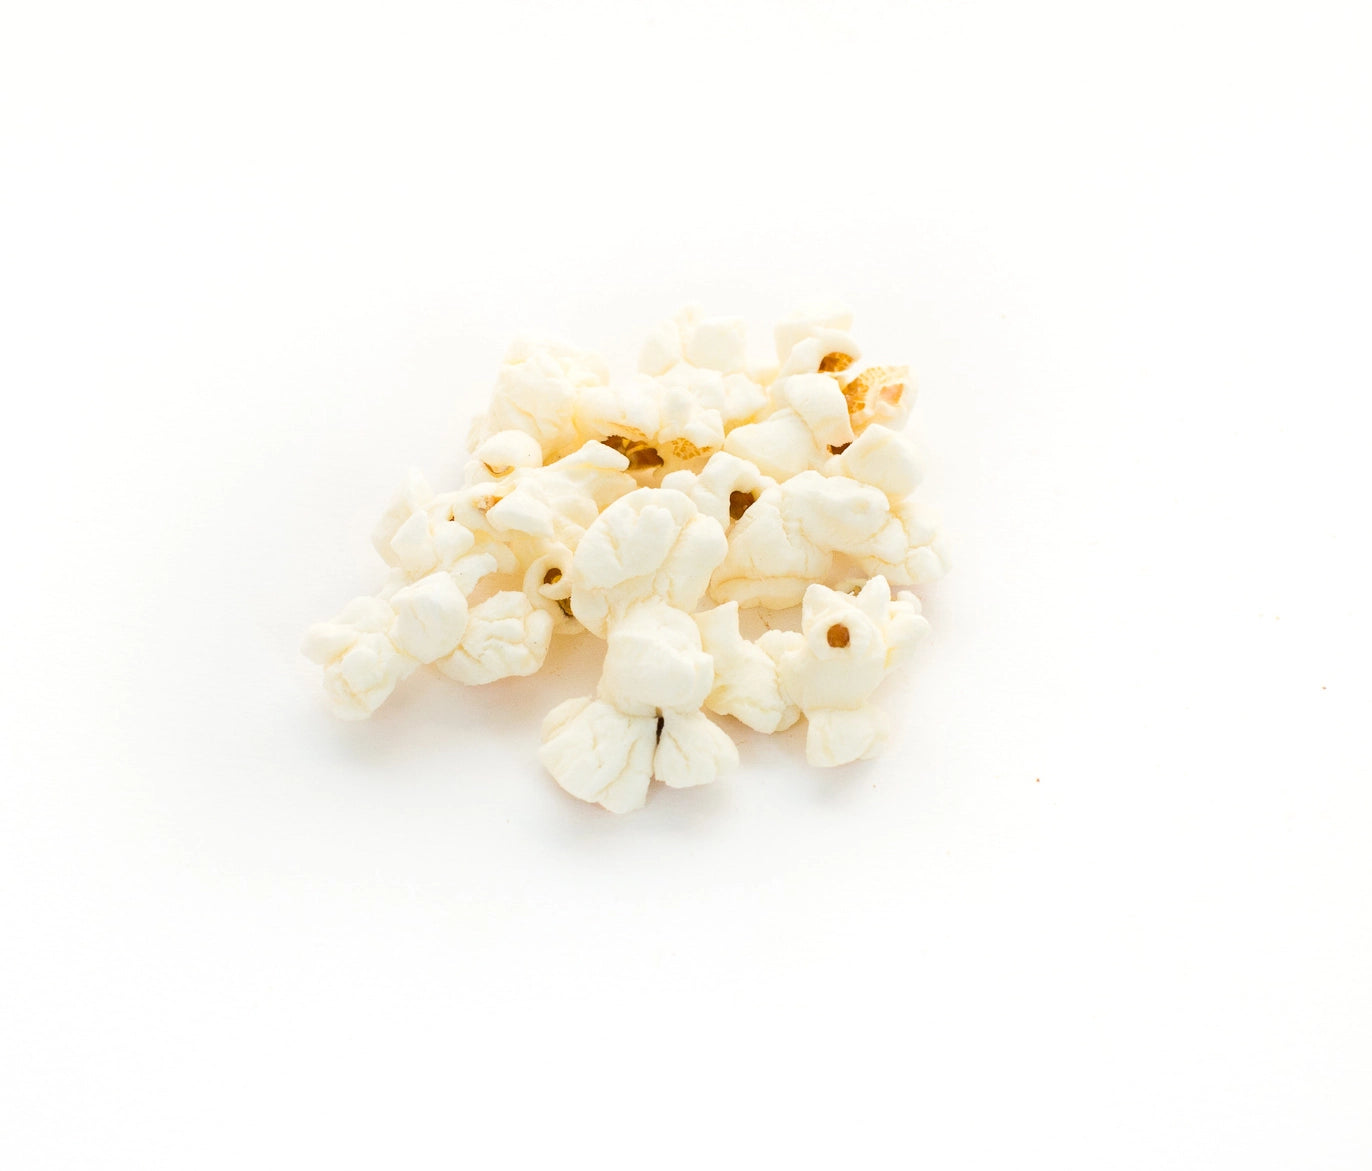 White Cheddar Popcorn